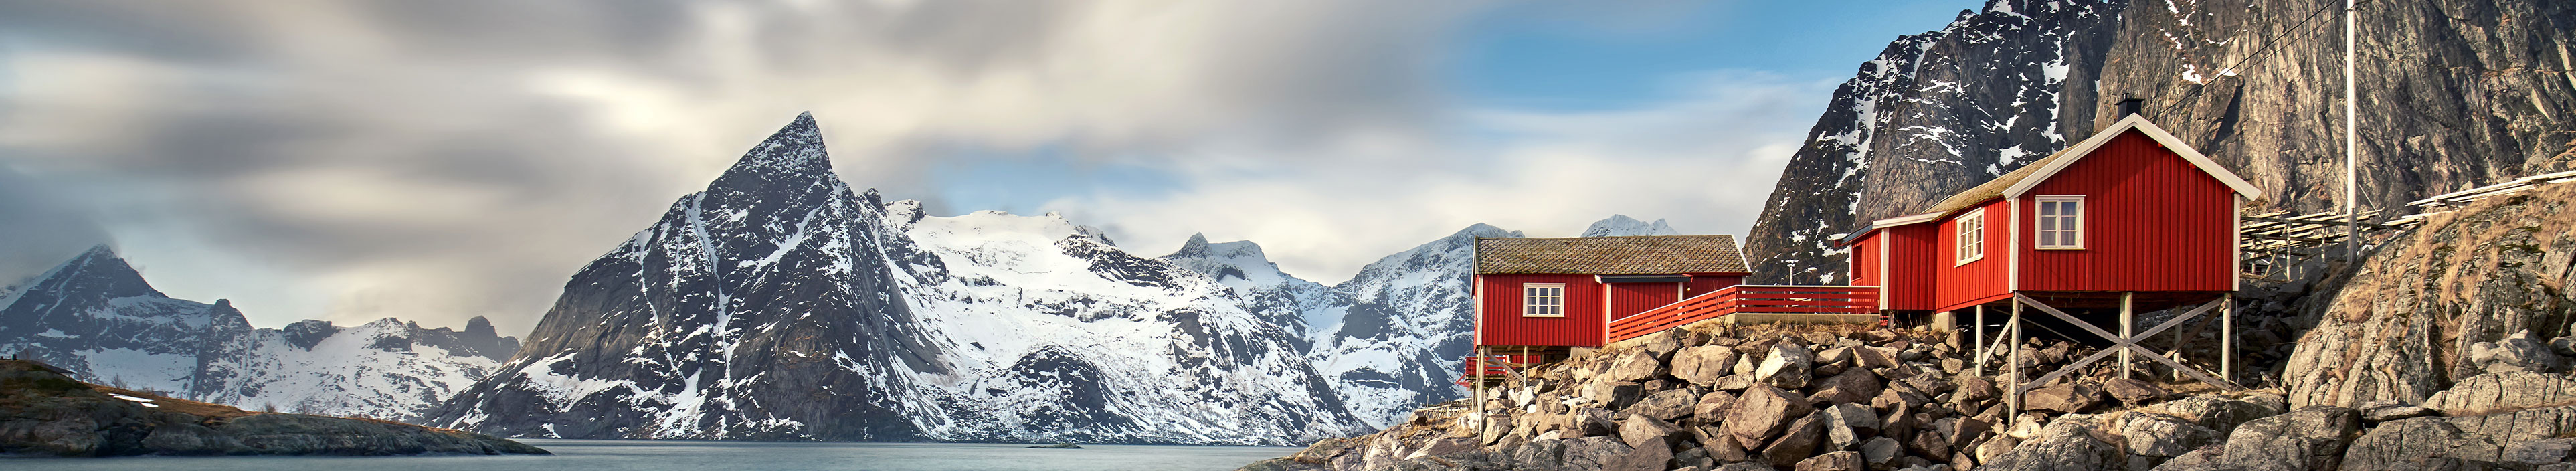 Haus und Berge in Norwegen